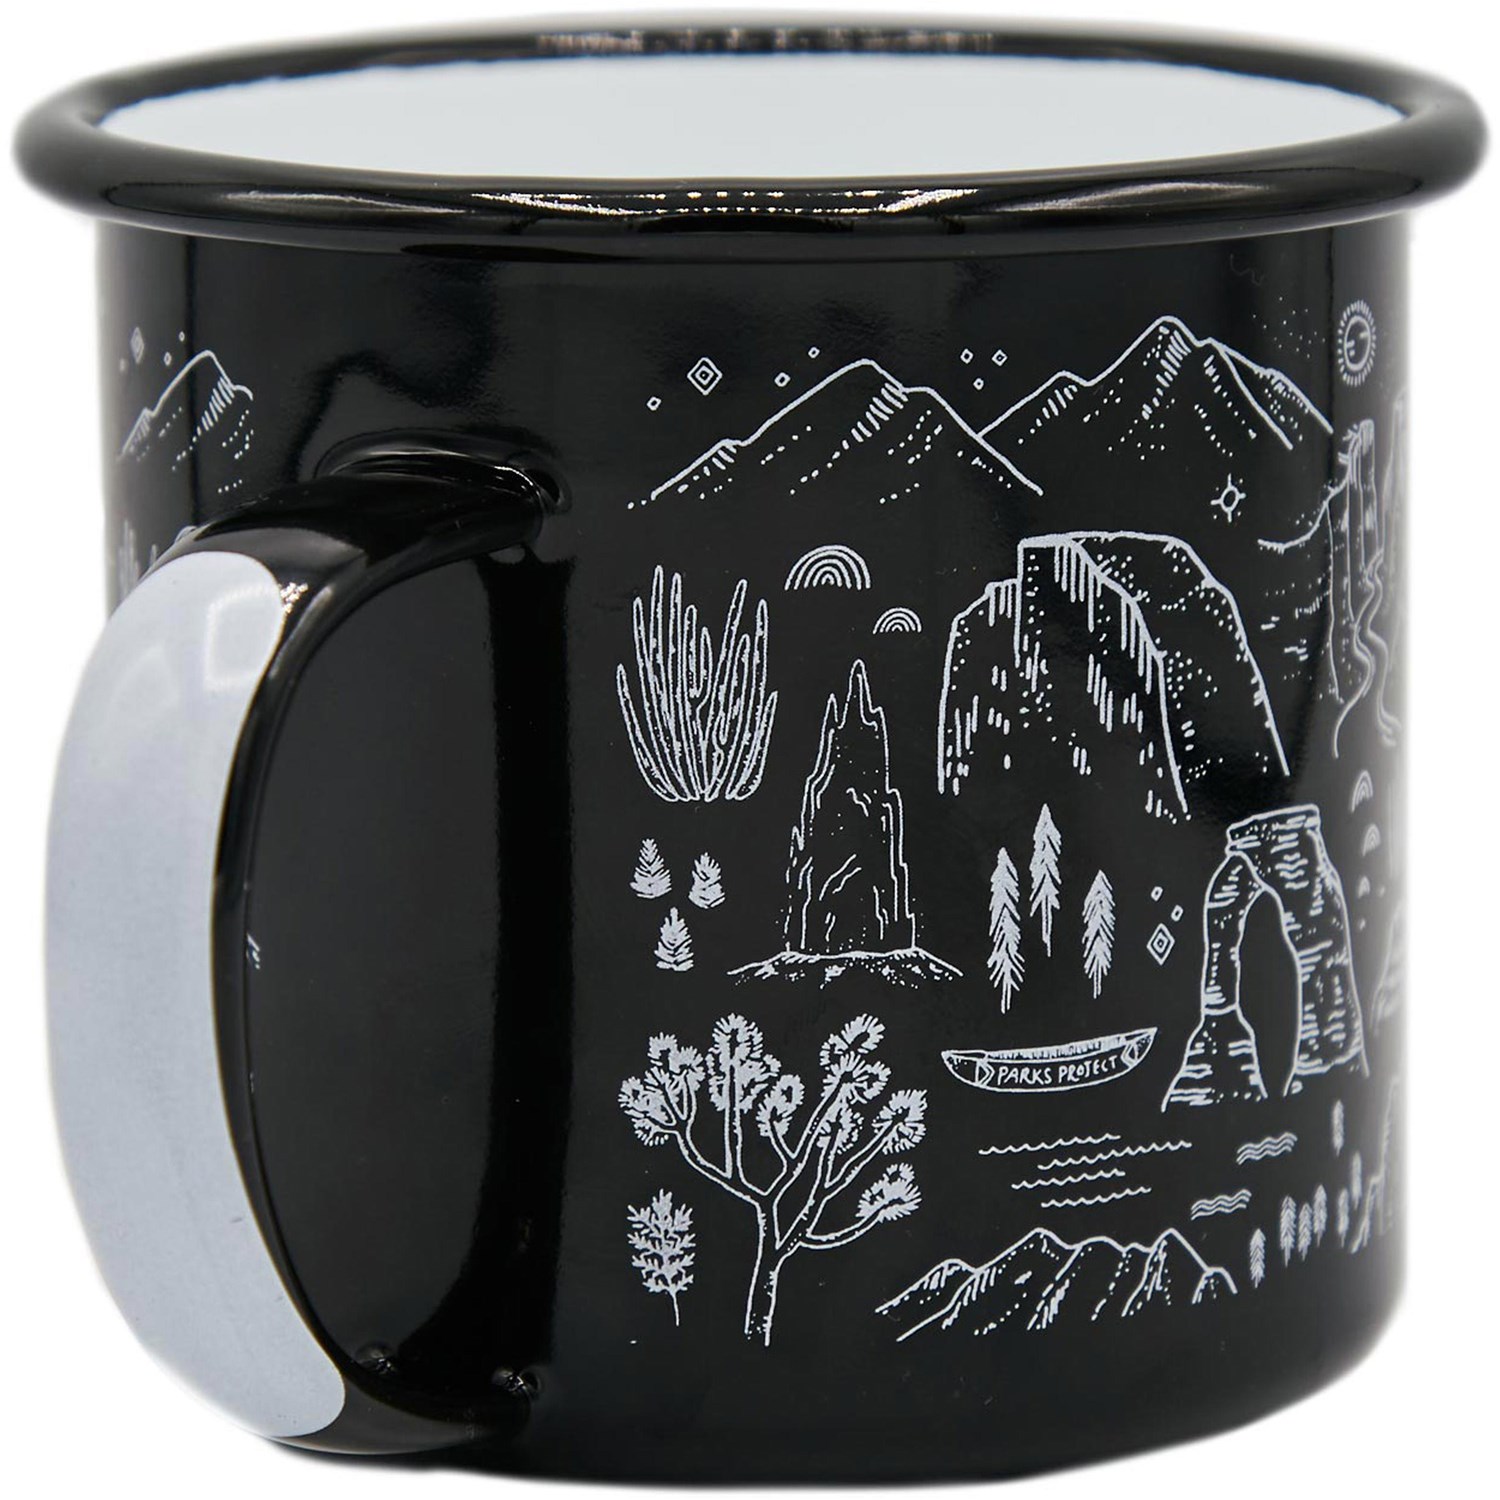 Shop National Park Iconic Enamel Mug Inspired By National Parks – Parks  Project